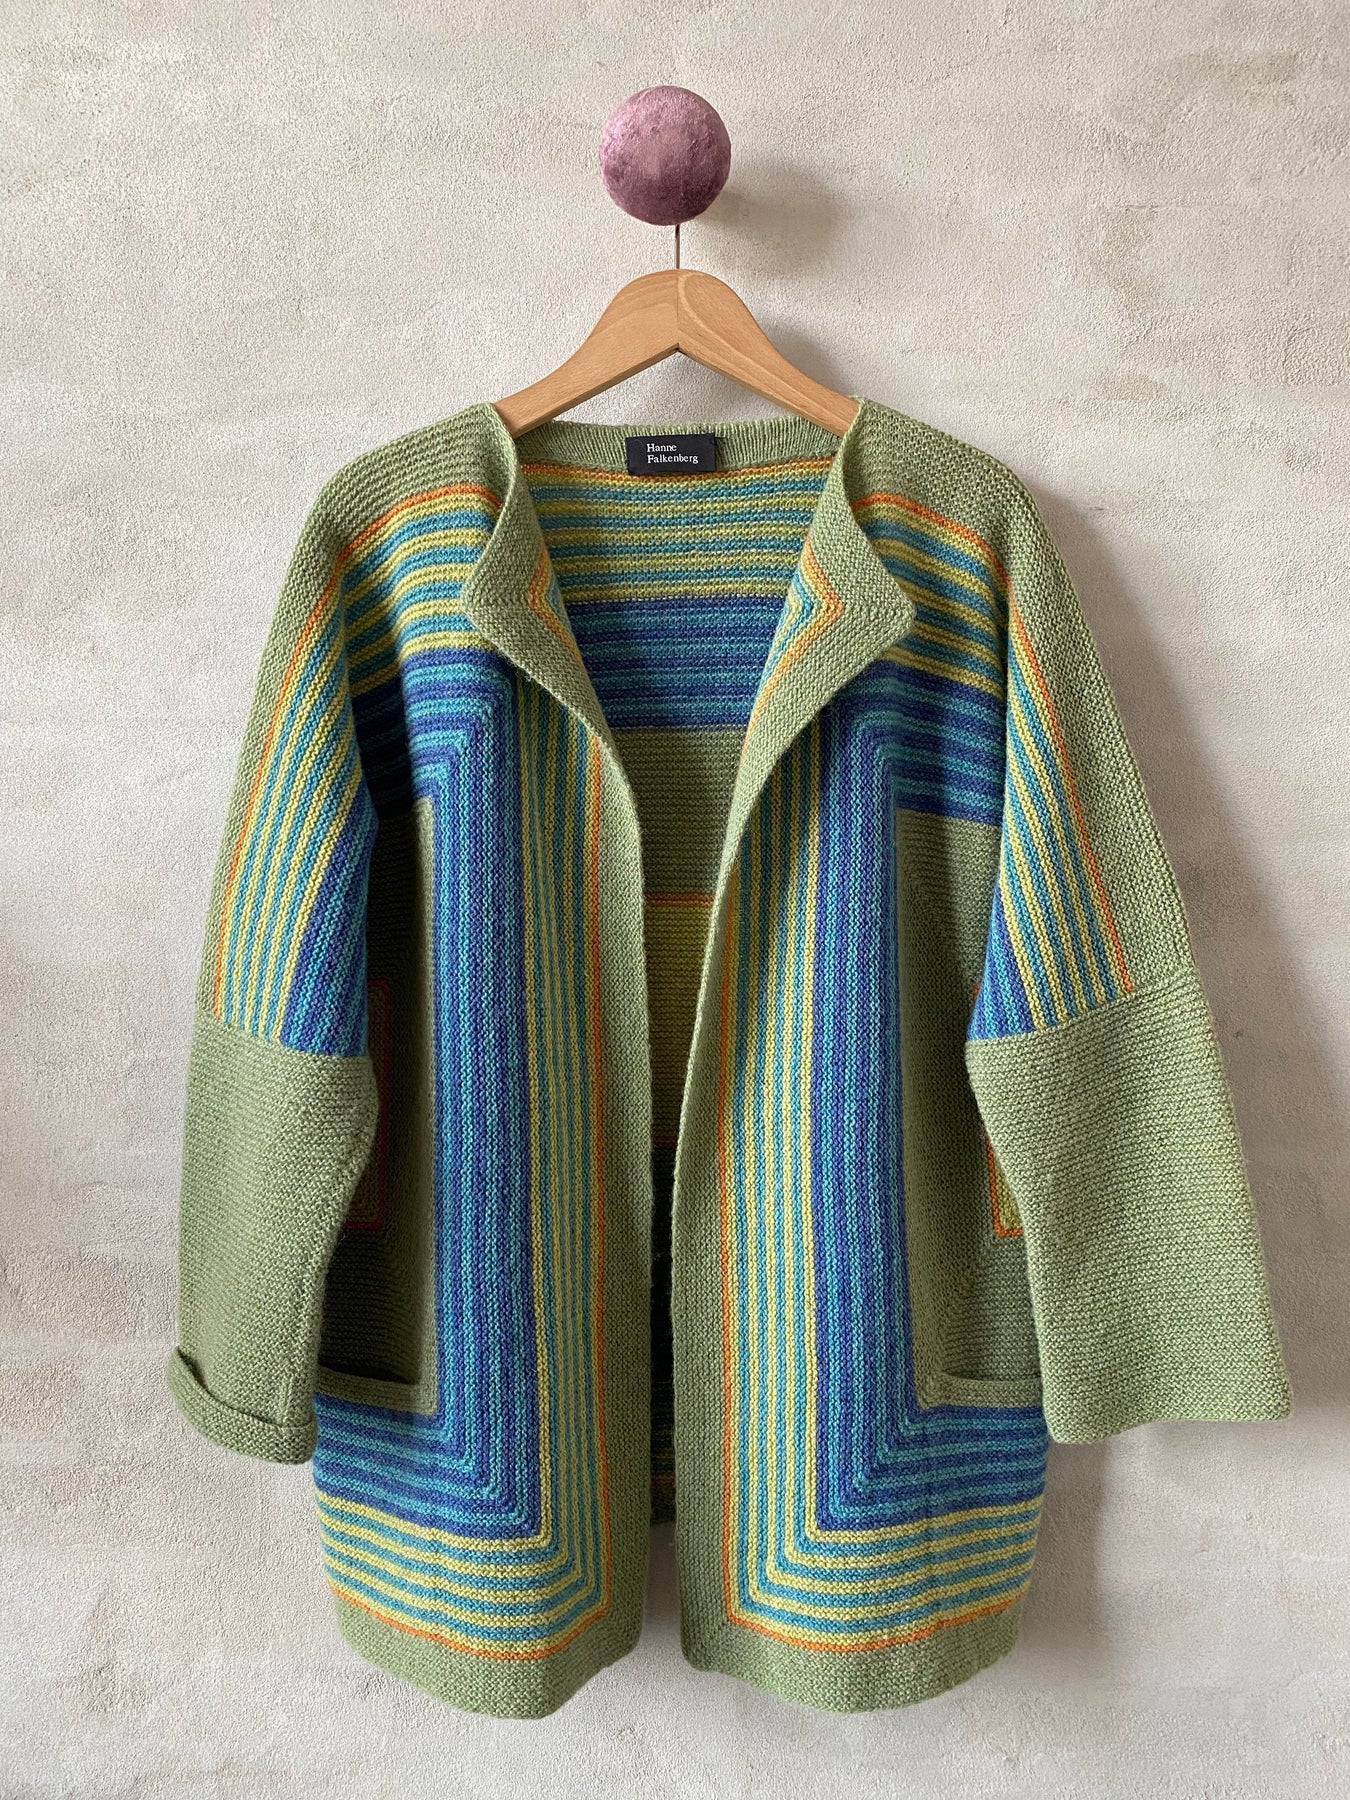 Pagode jacket by Hanne Falkenberg, No 20 knitting kit, 5 colors